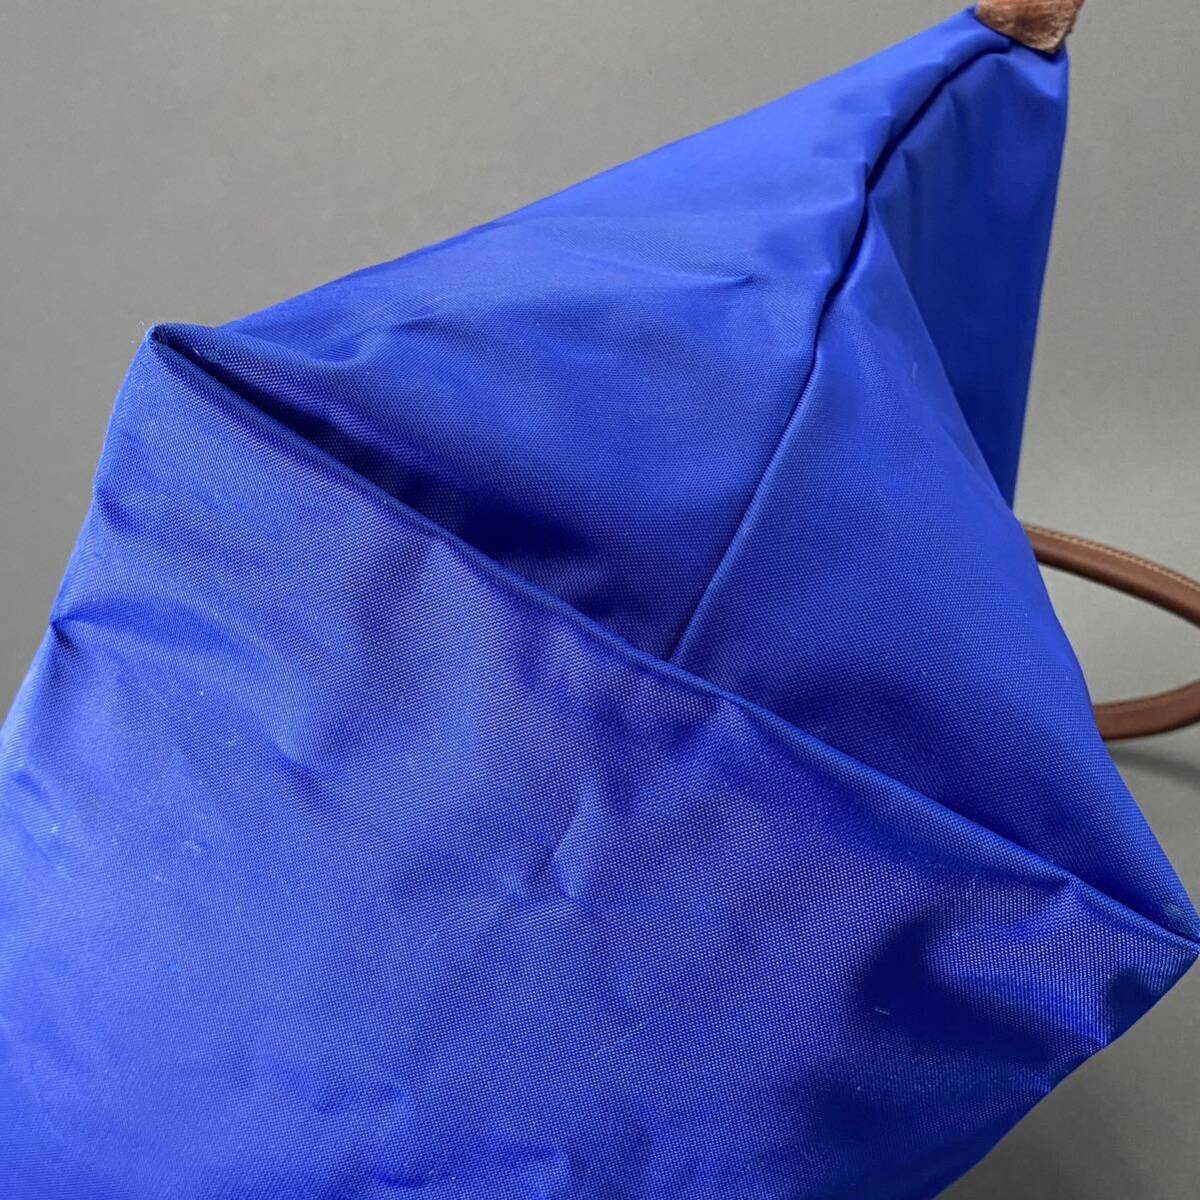 Dc26 LONGCHAMP Long Champ rup rear -juL shoulder bag nylon tote bag folding * light weight blue lady's woman bag 